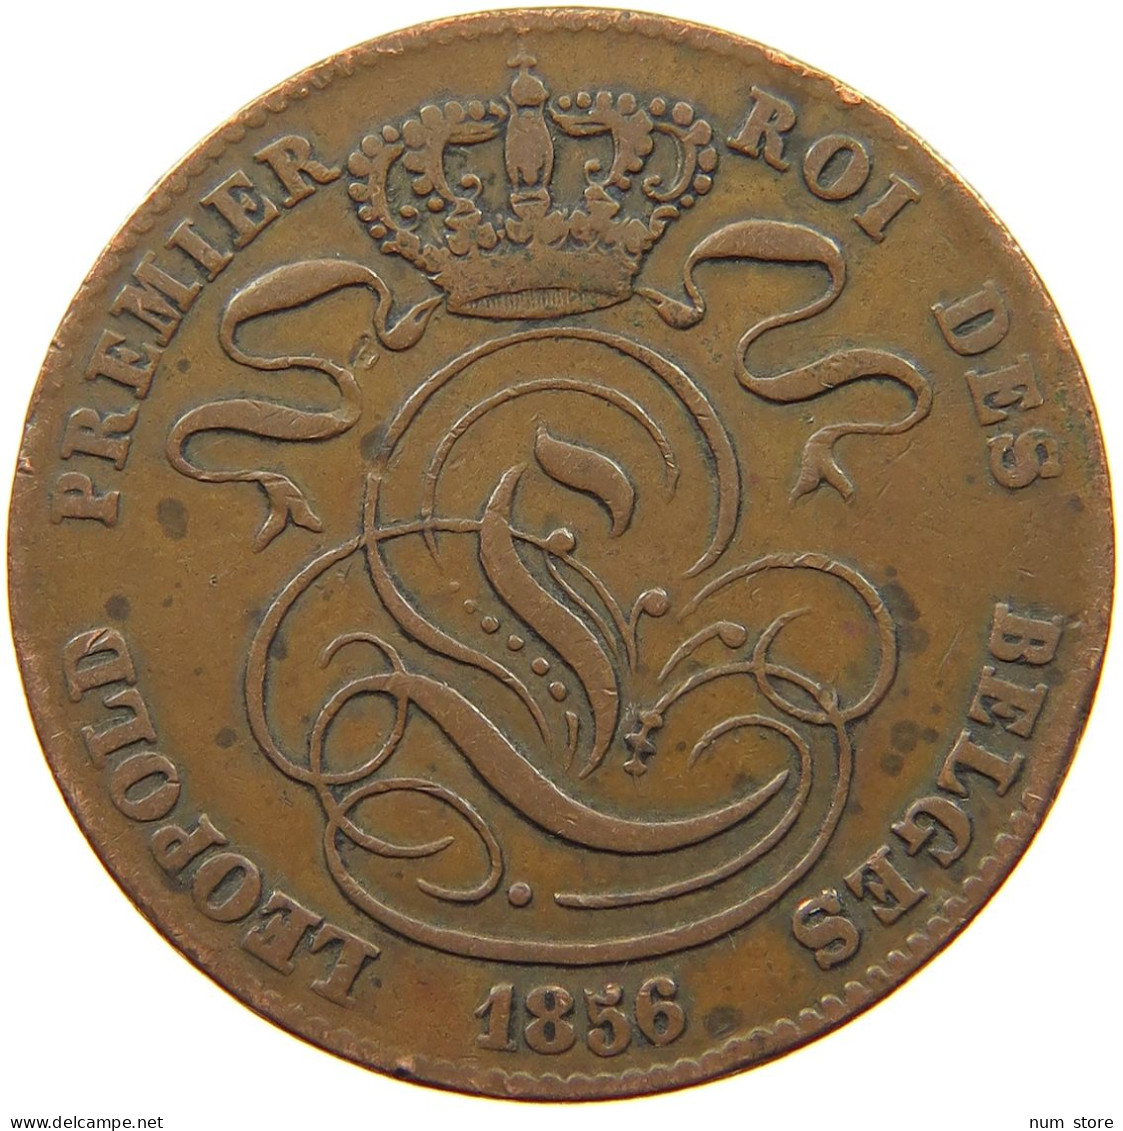 BELGIUM 5 CENTIMES 1856 Leopold I. (1831-1865) #s046 0379 - 5 Cents